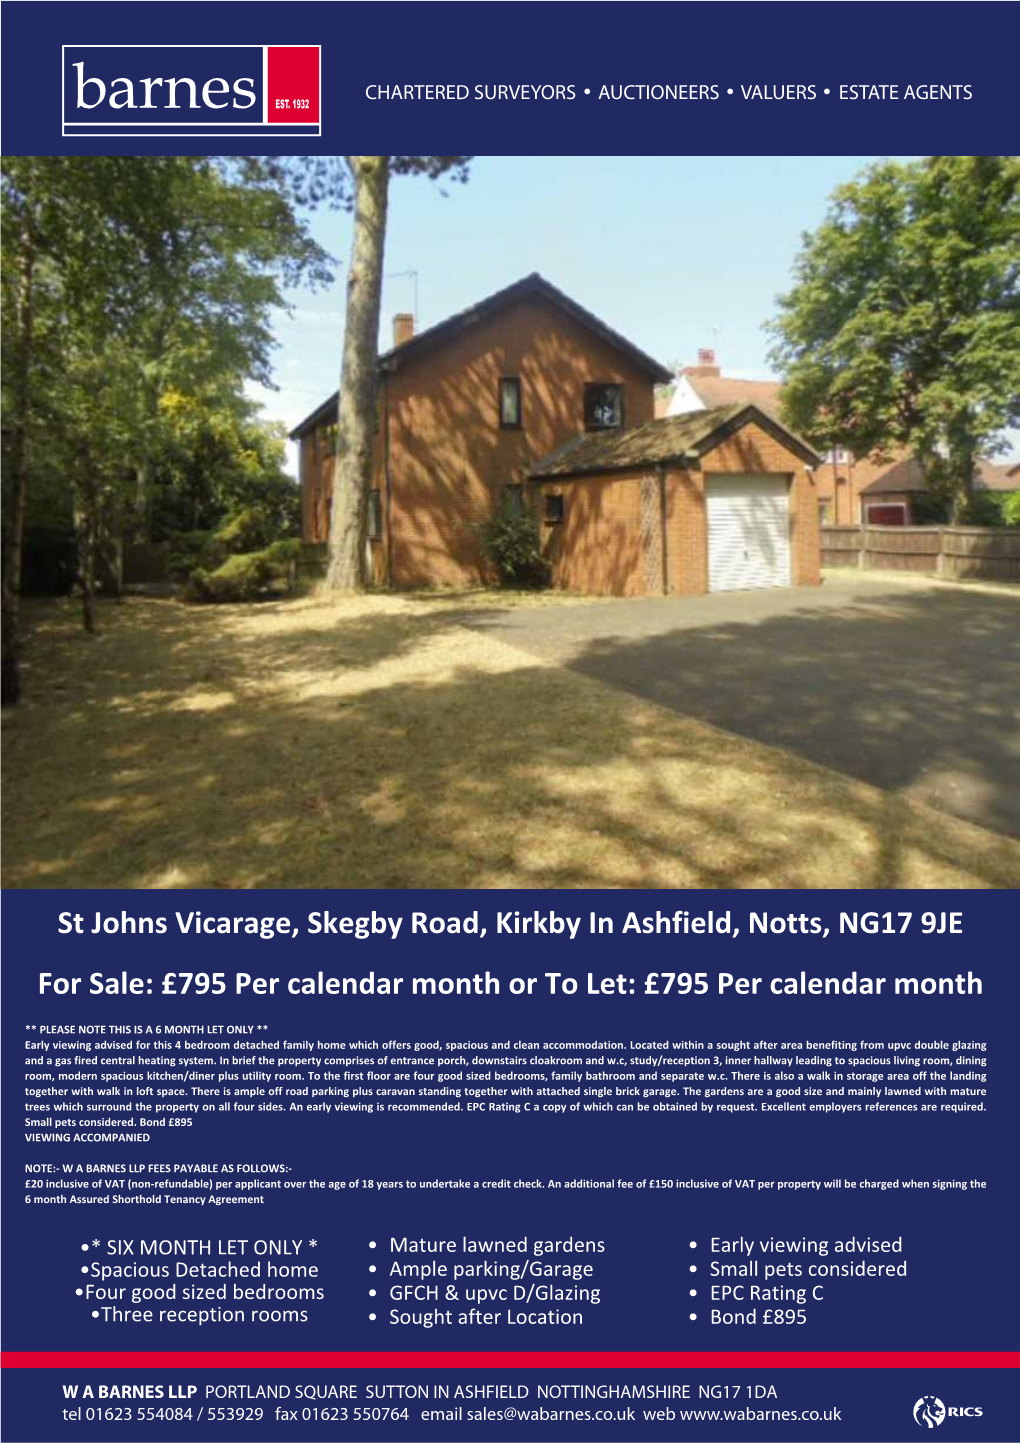 St Johns Vicarage, Skegby Road, Kirkby in Ashfield, Notts, NG17 9JE for Sale: £795 Per Calendar Month Or to Let: £795 Per Calendar Month